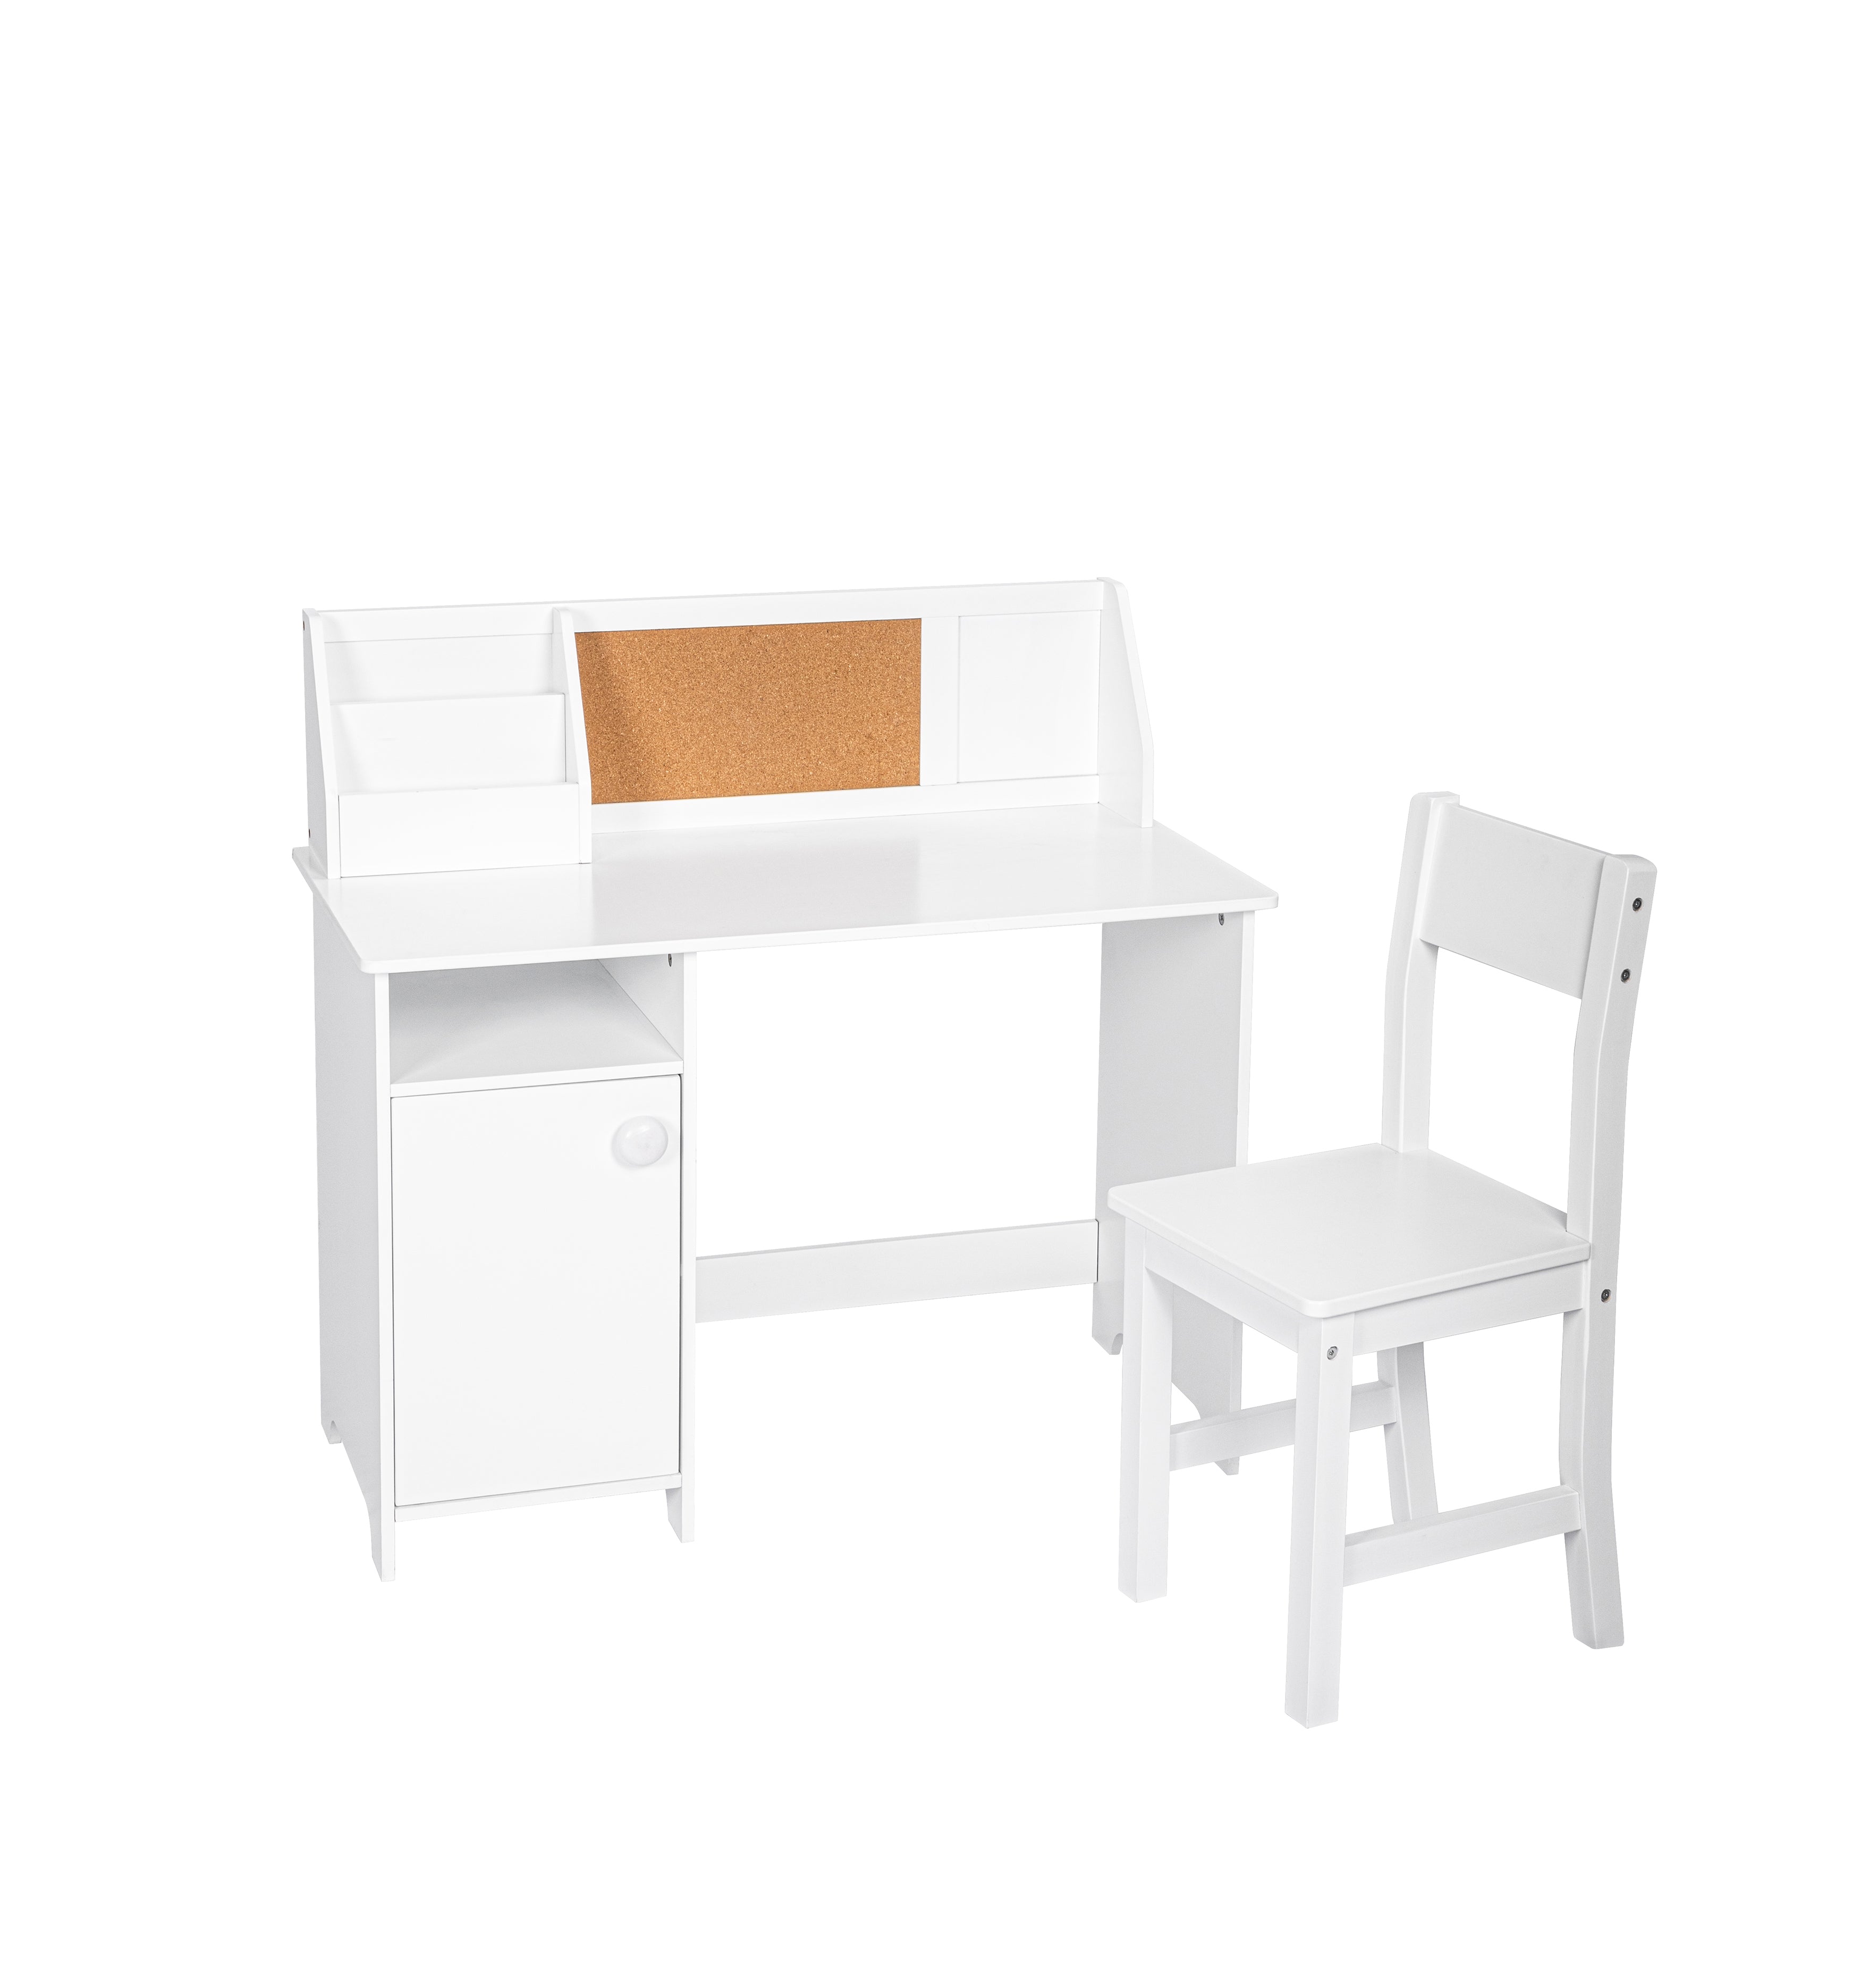 UTEX Single Door White Kids Study Desk With Storage